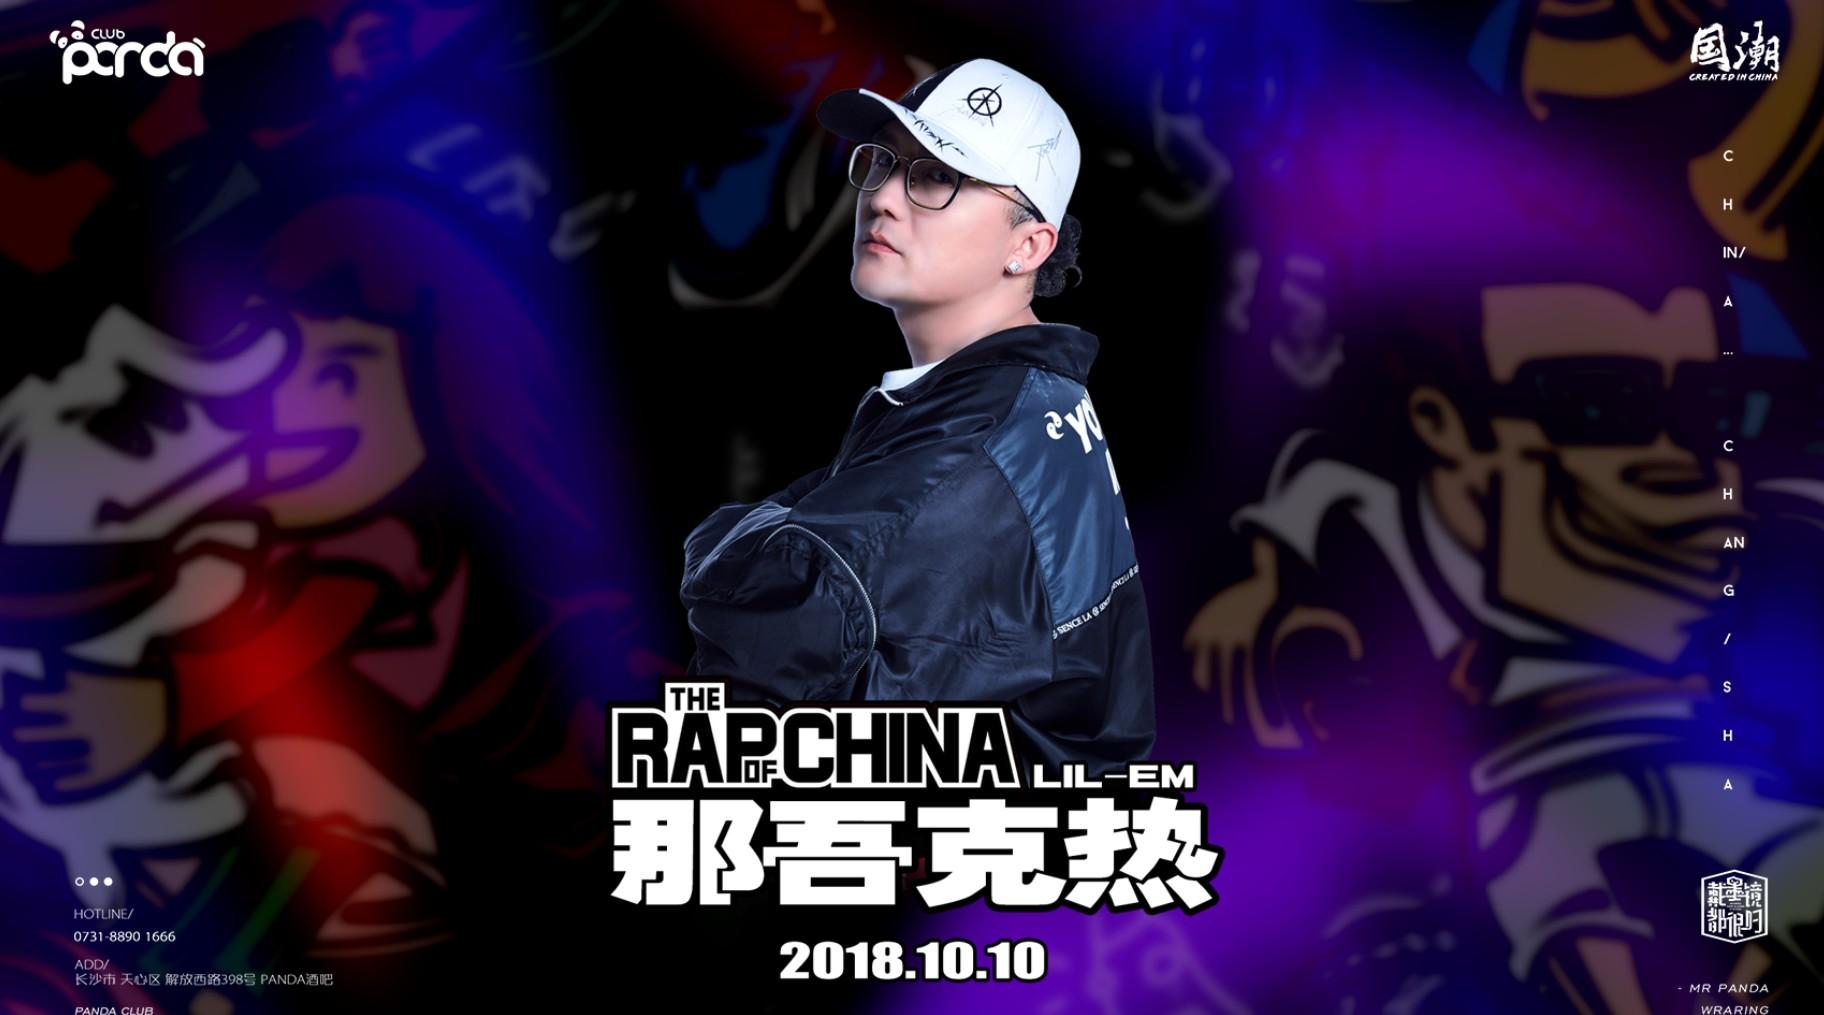 #MR PANDA·長沙#10月10日，硬核Rapper【那吾克热】